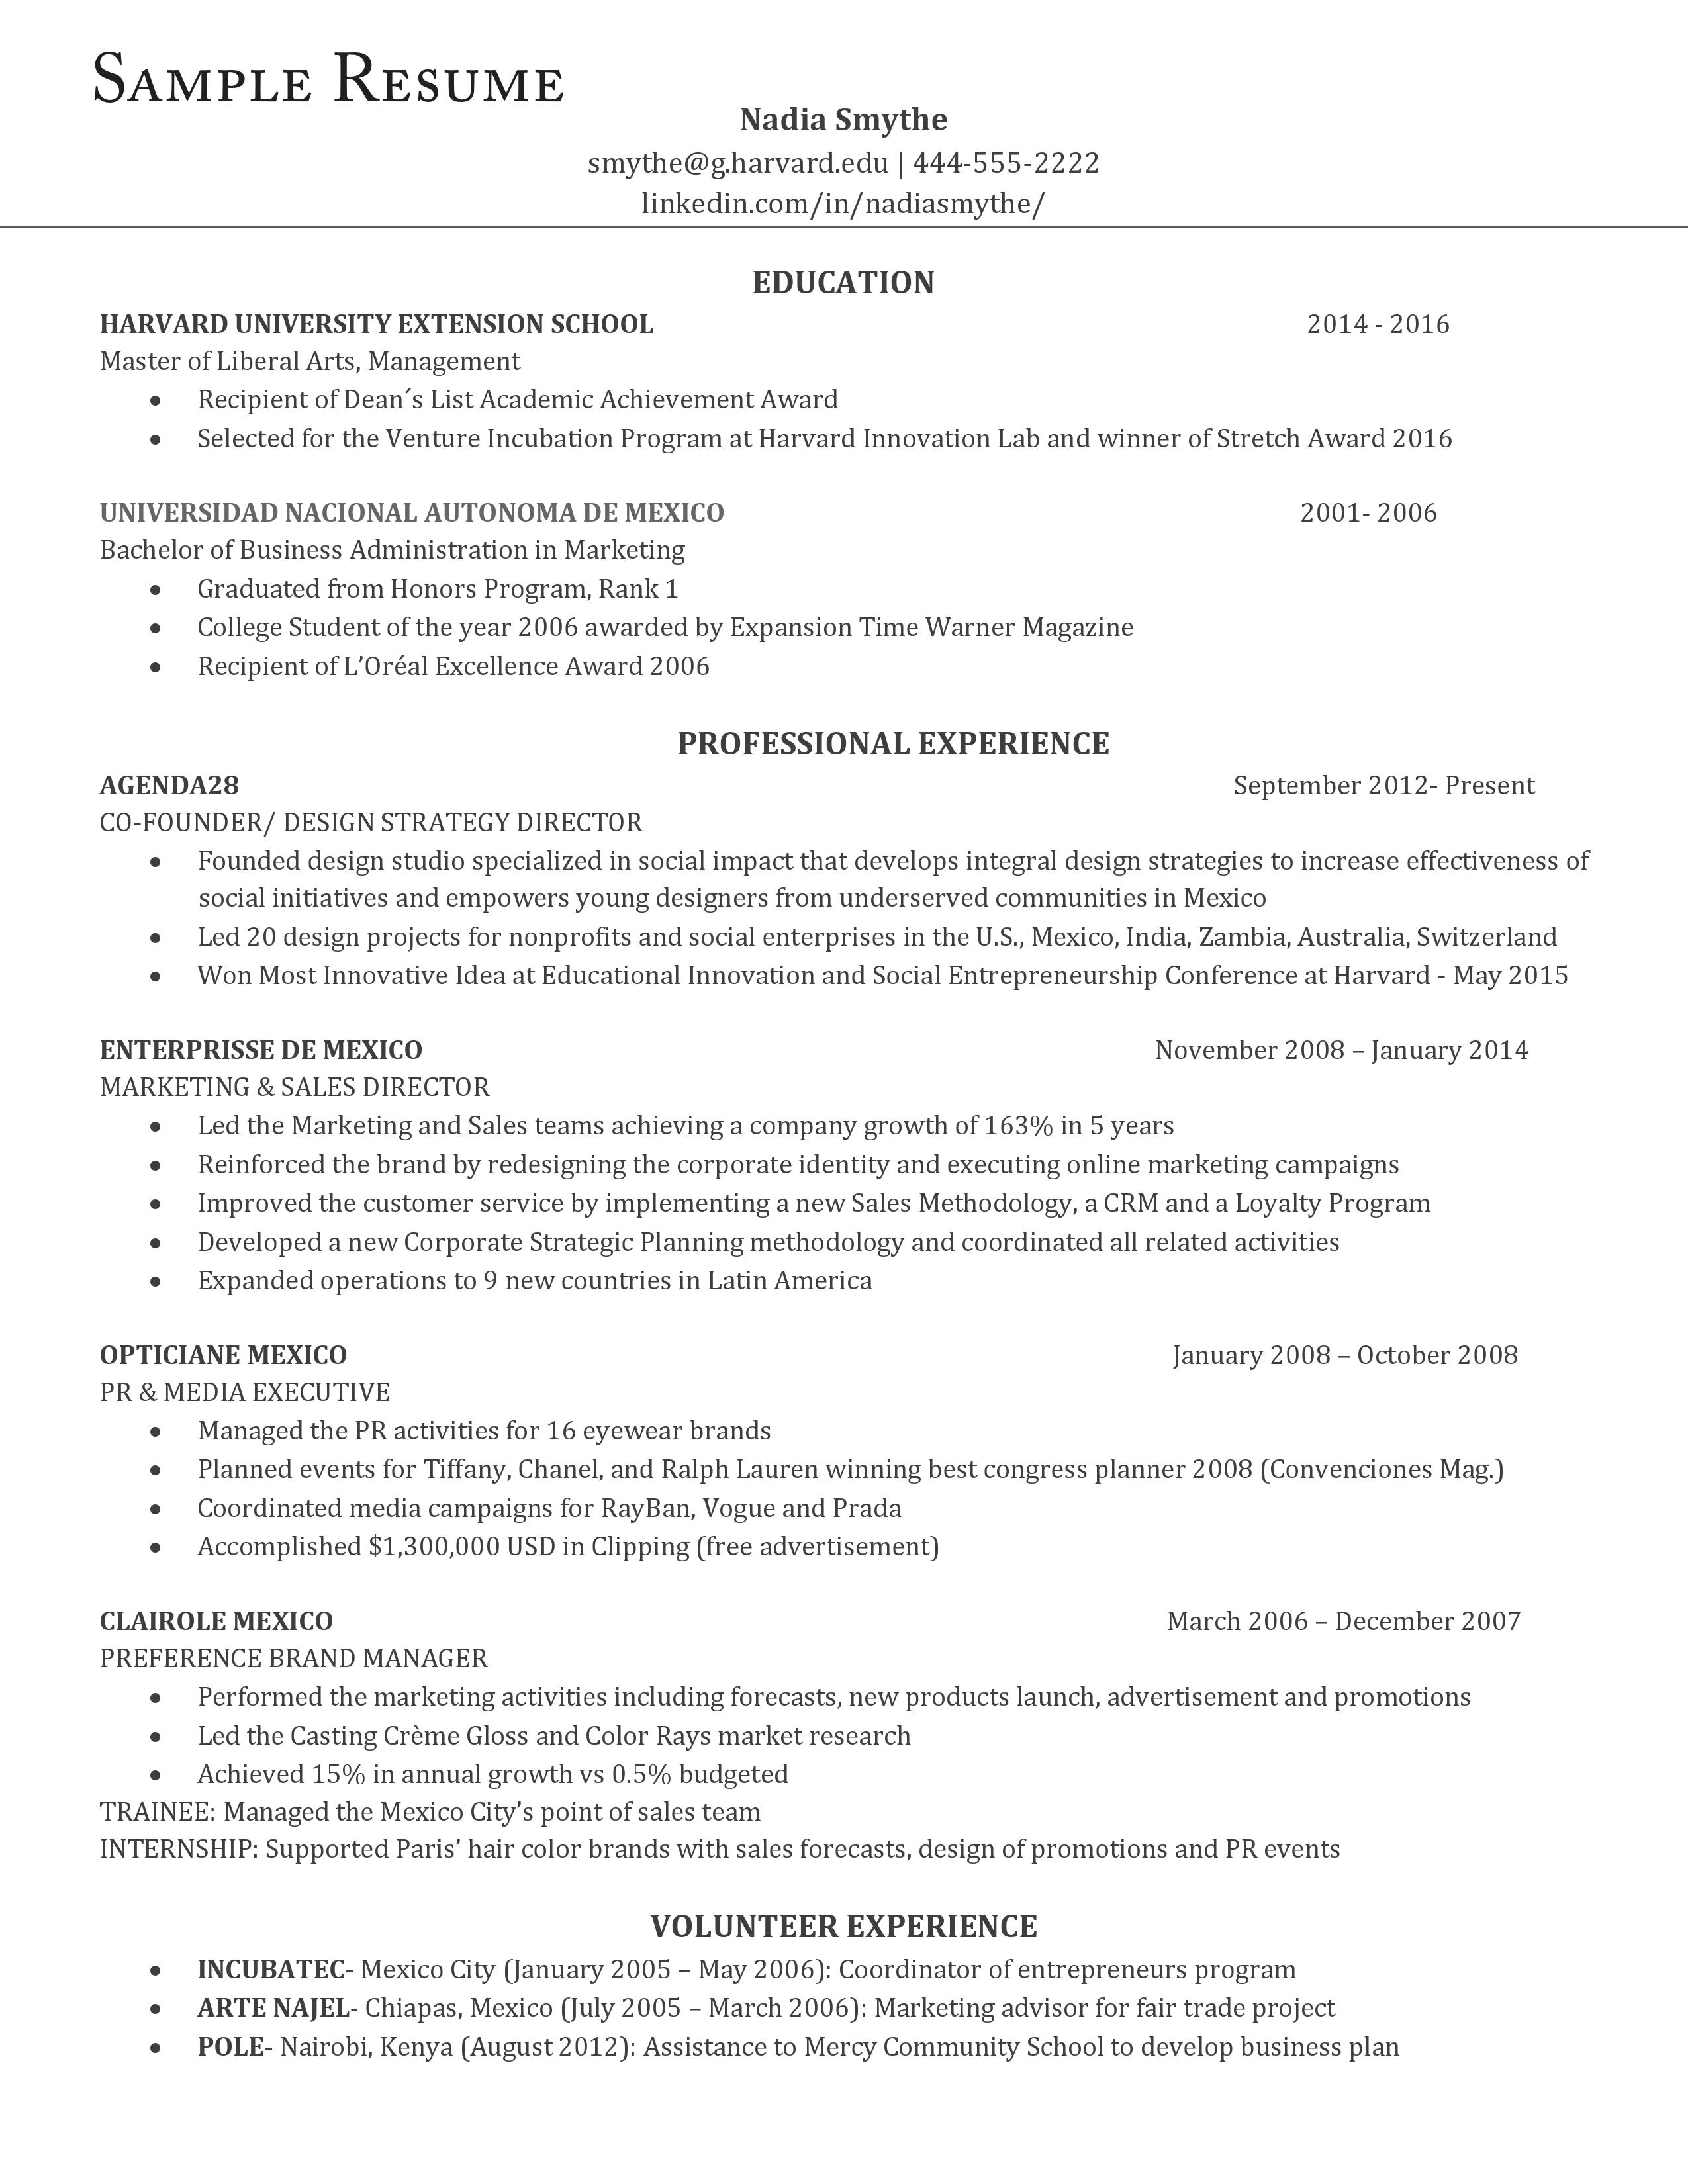 resume harvard